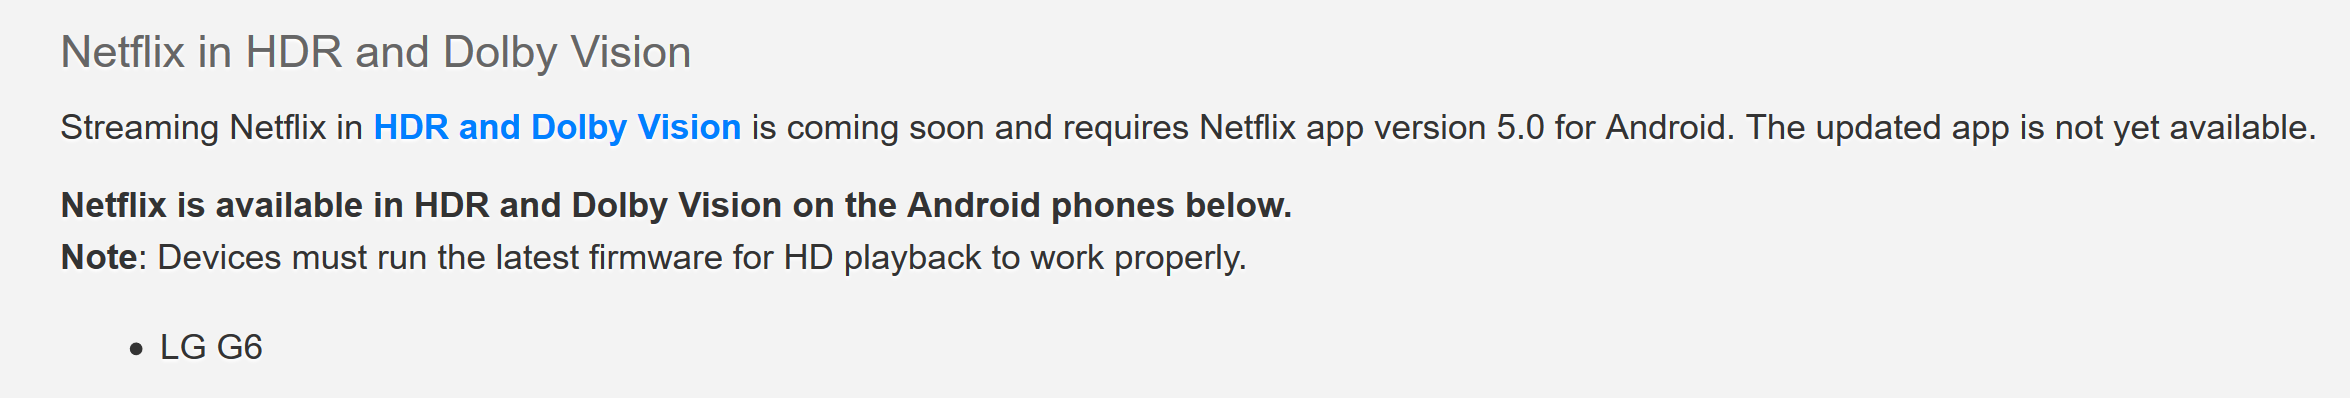 Netflix Mobile HDR